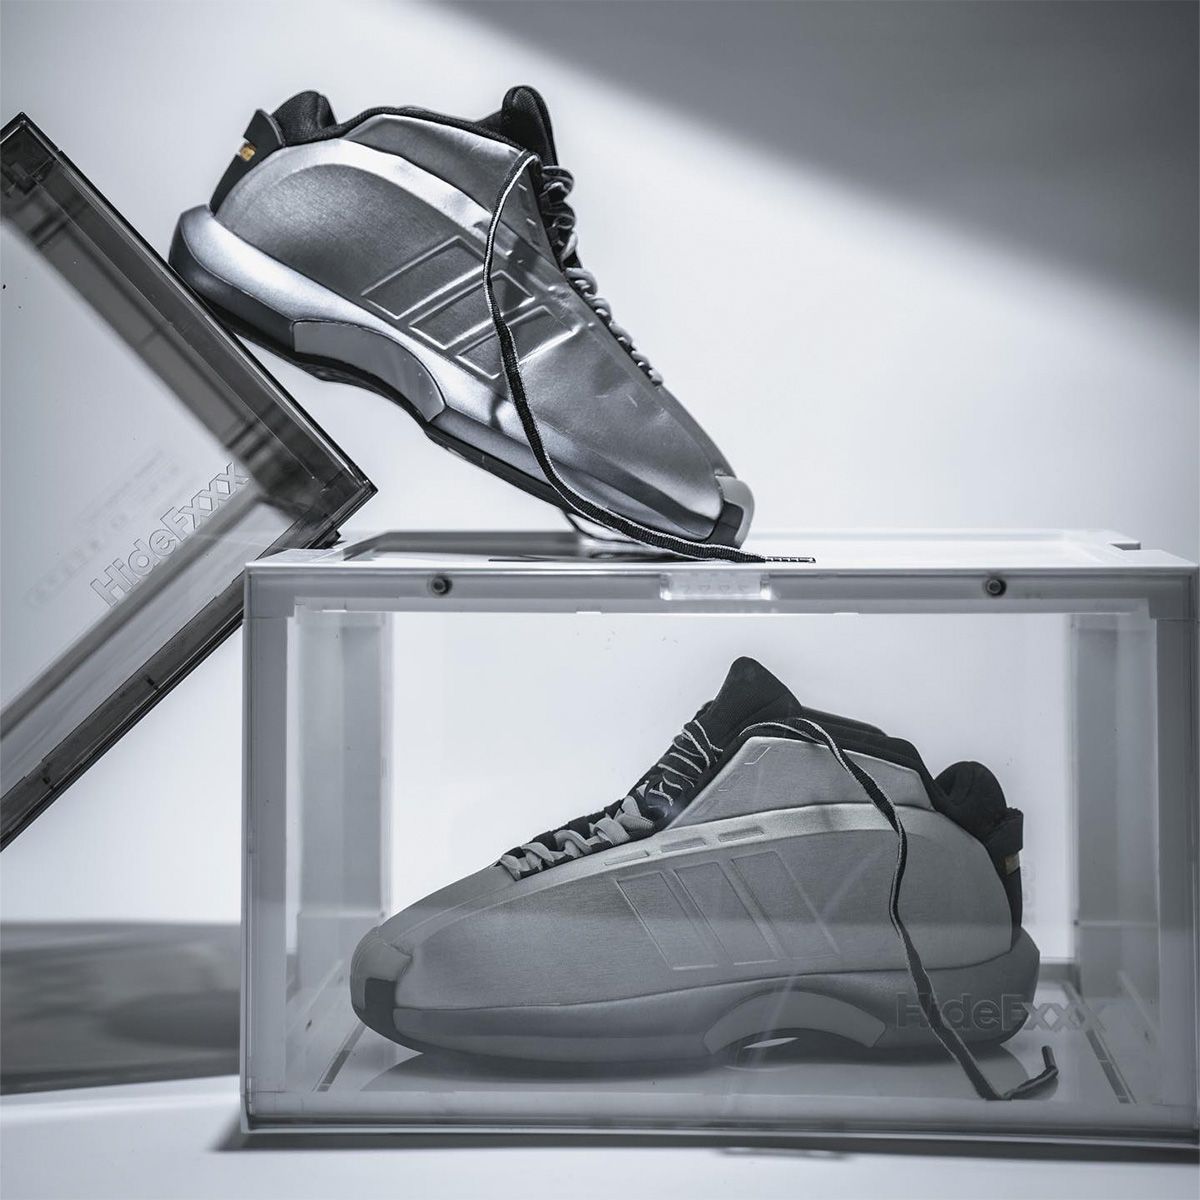 Where to Buy Kobe adidas Crazy 1 “Metallic Silver” | House of Heat°